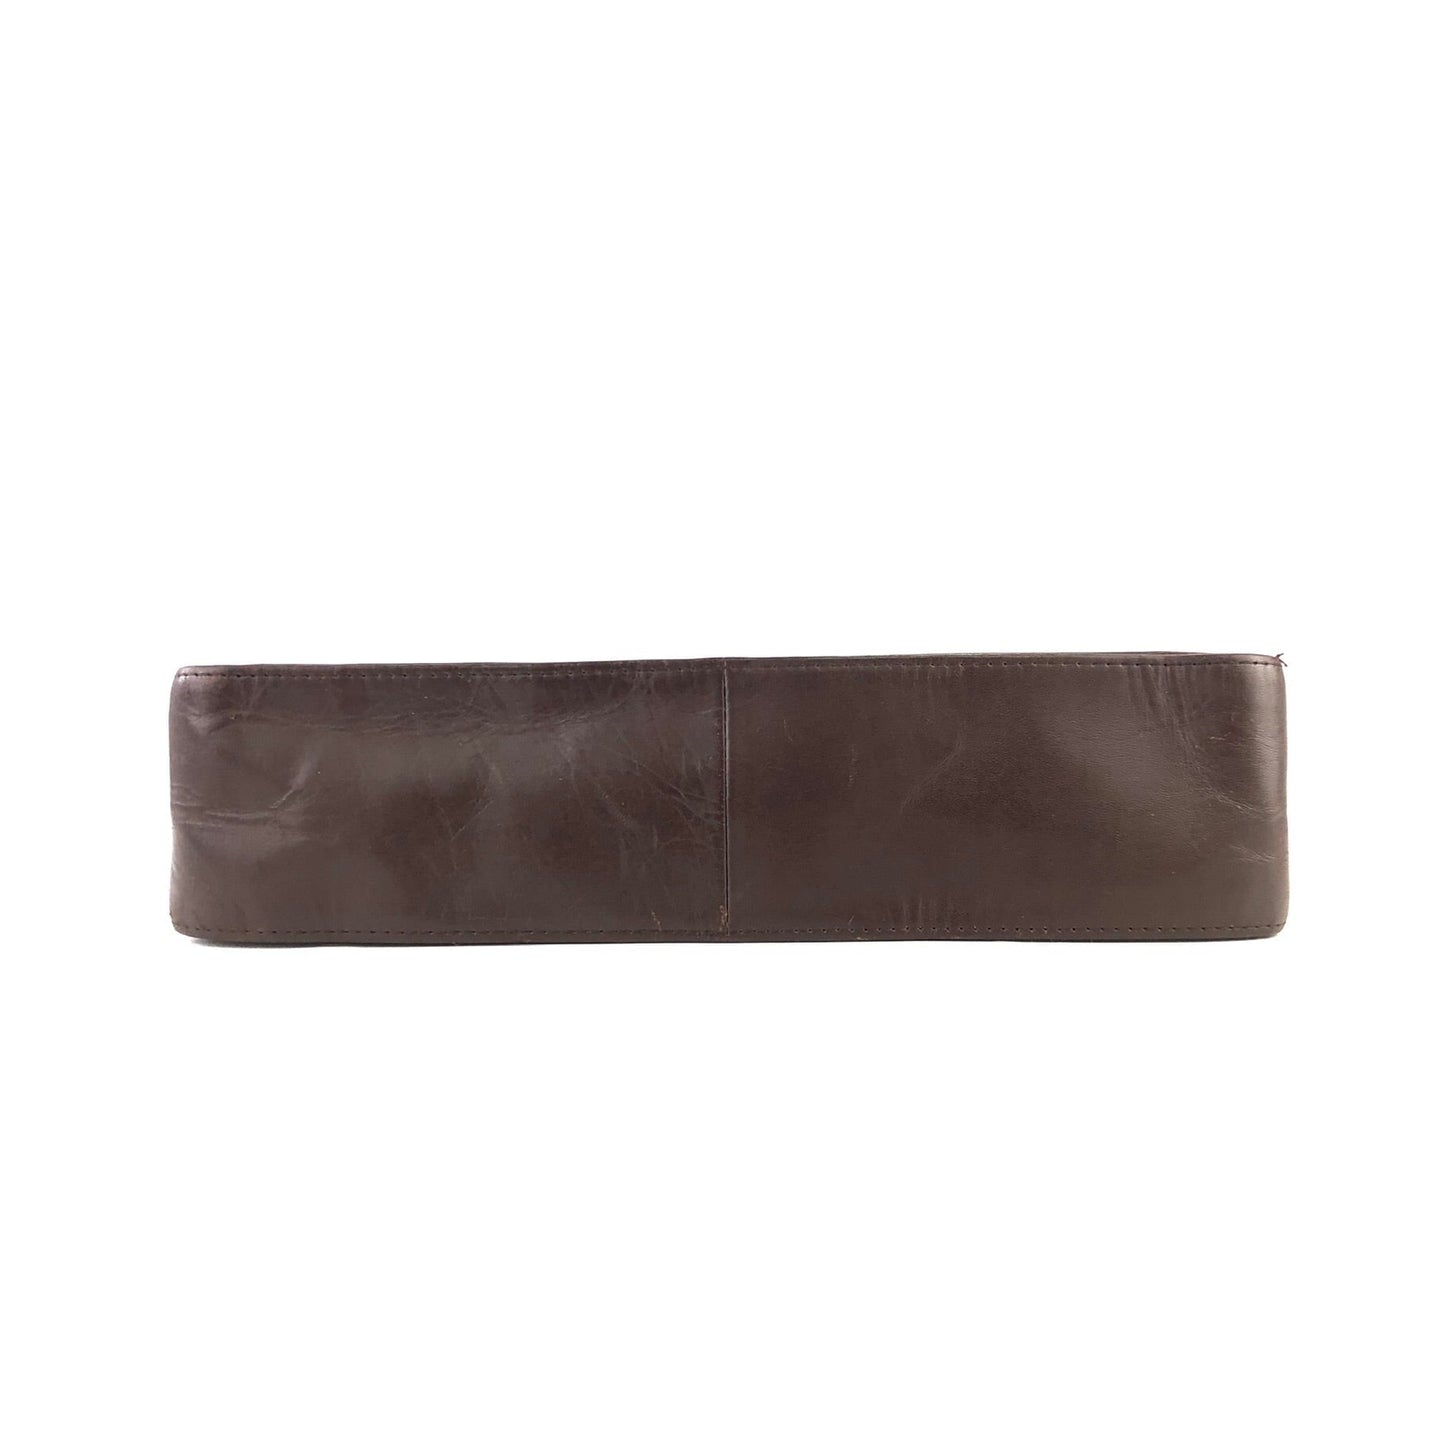 Yves Saint Laurent YSL embossed leather circle shoulder bag brown vintage old ttxy8i